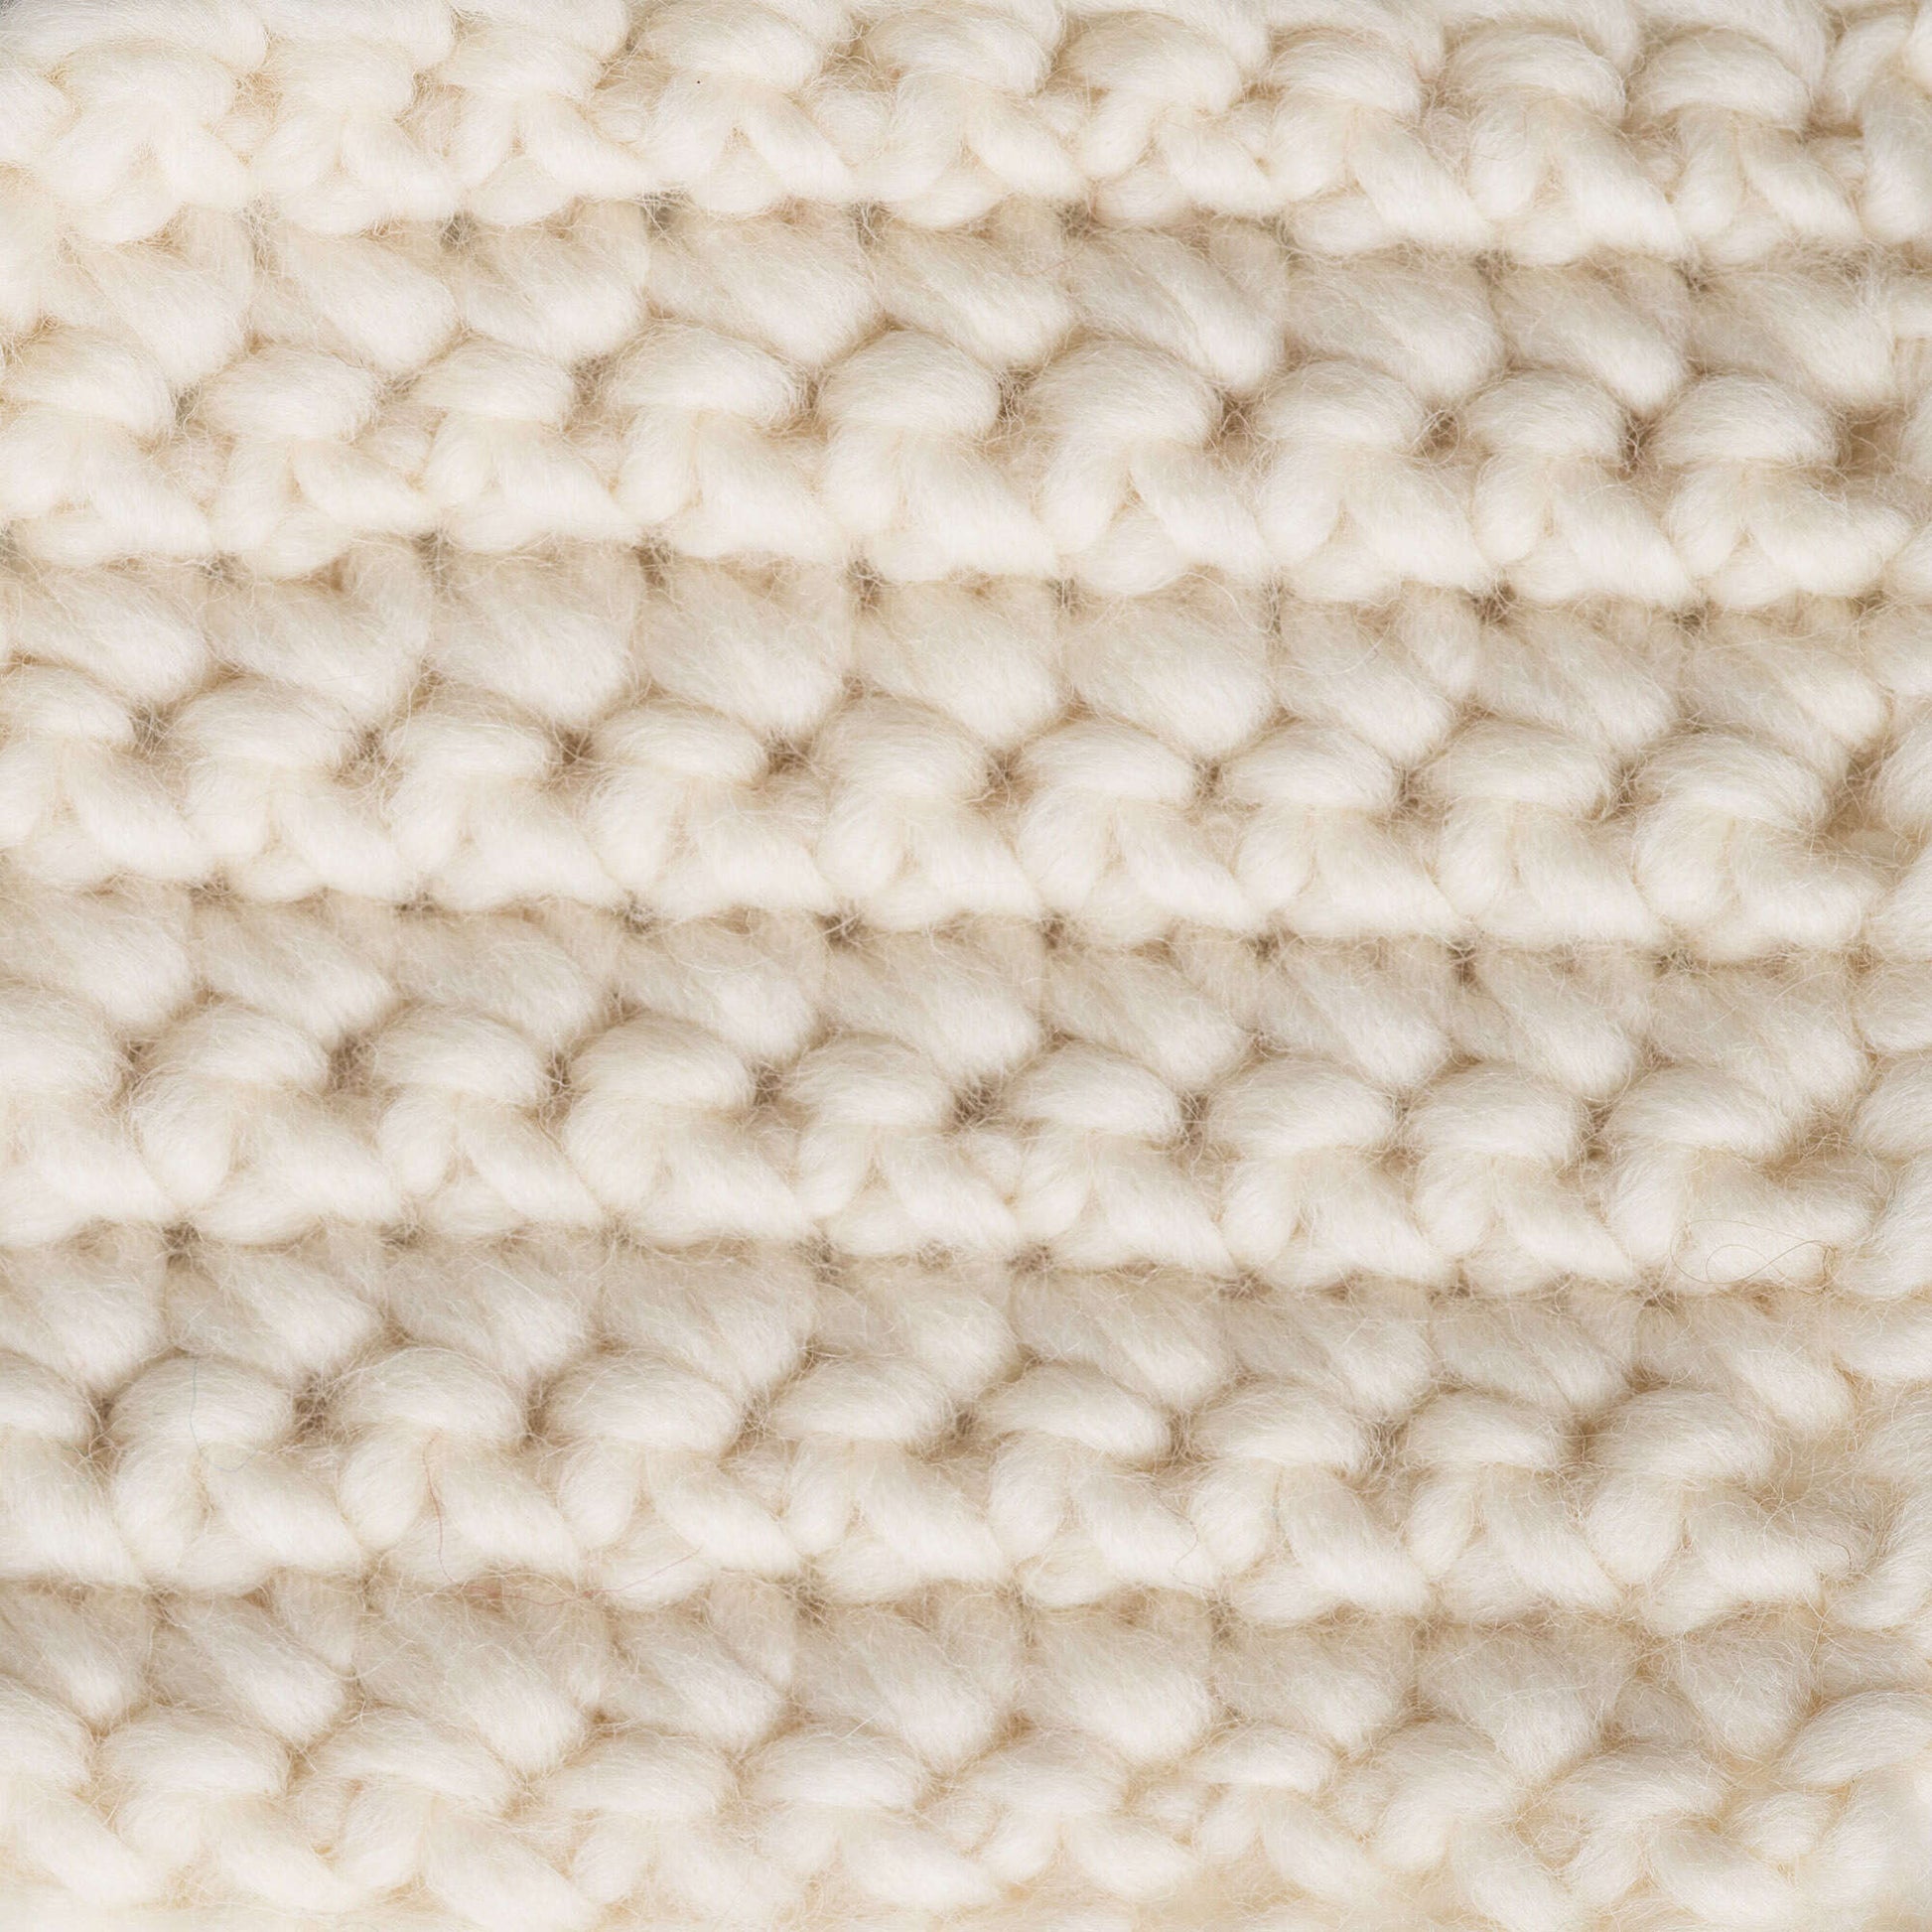 Roving Yarn Patterns: 6 Knitting Patterns for Roving Yarn